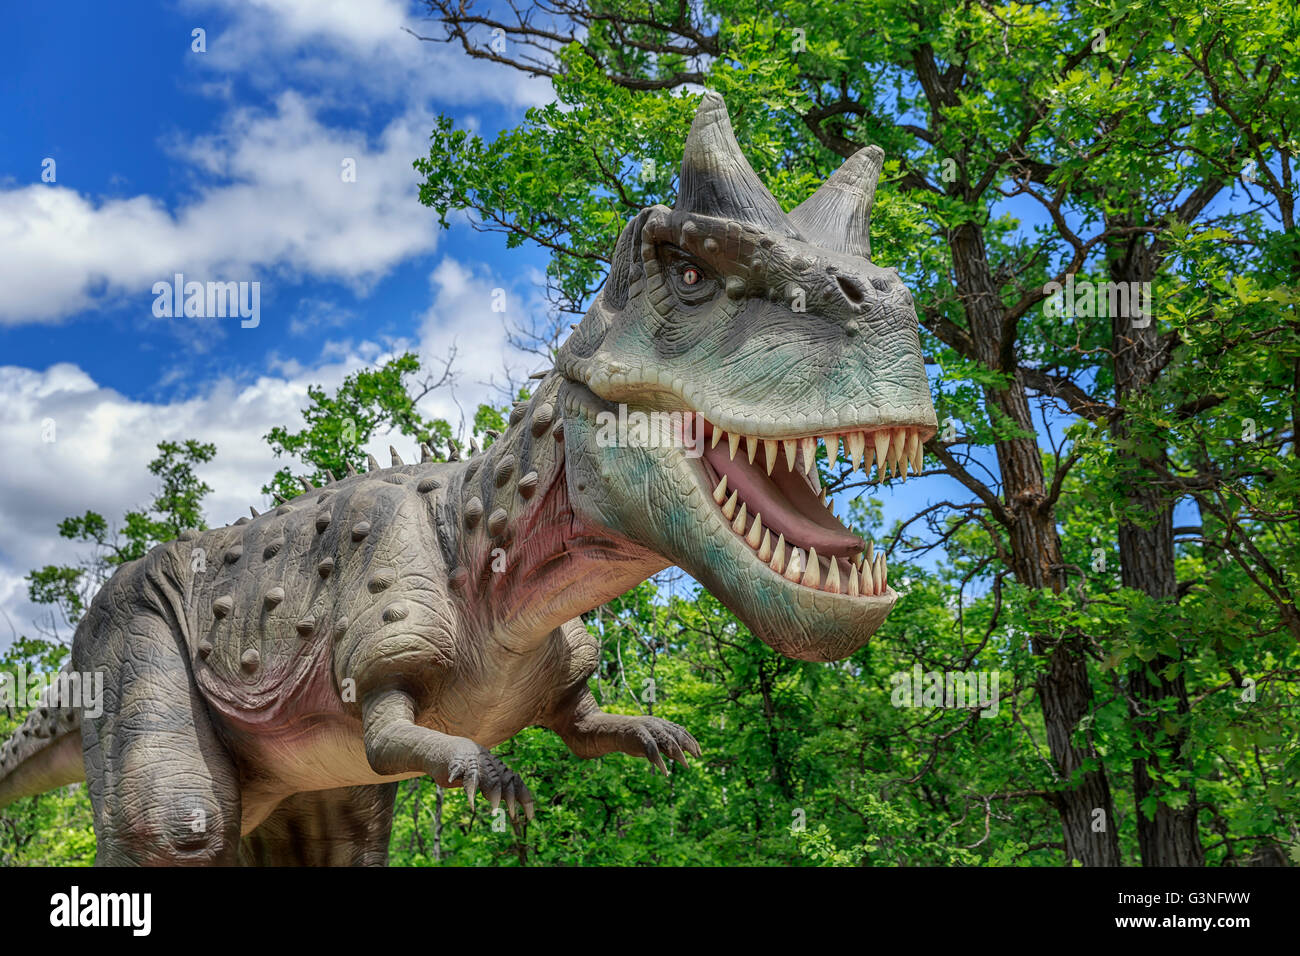 Carnotaurus dinosaur at Dinosaurs Alive, Assiniboine Park Zoo, Winnipeg, Manitoba, Canada. Stock Photo